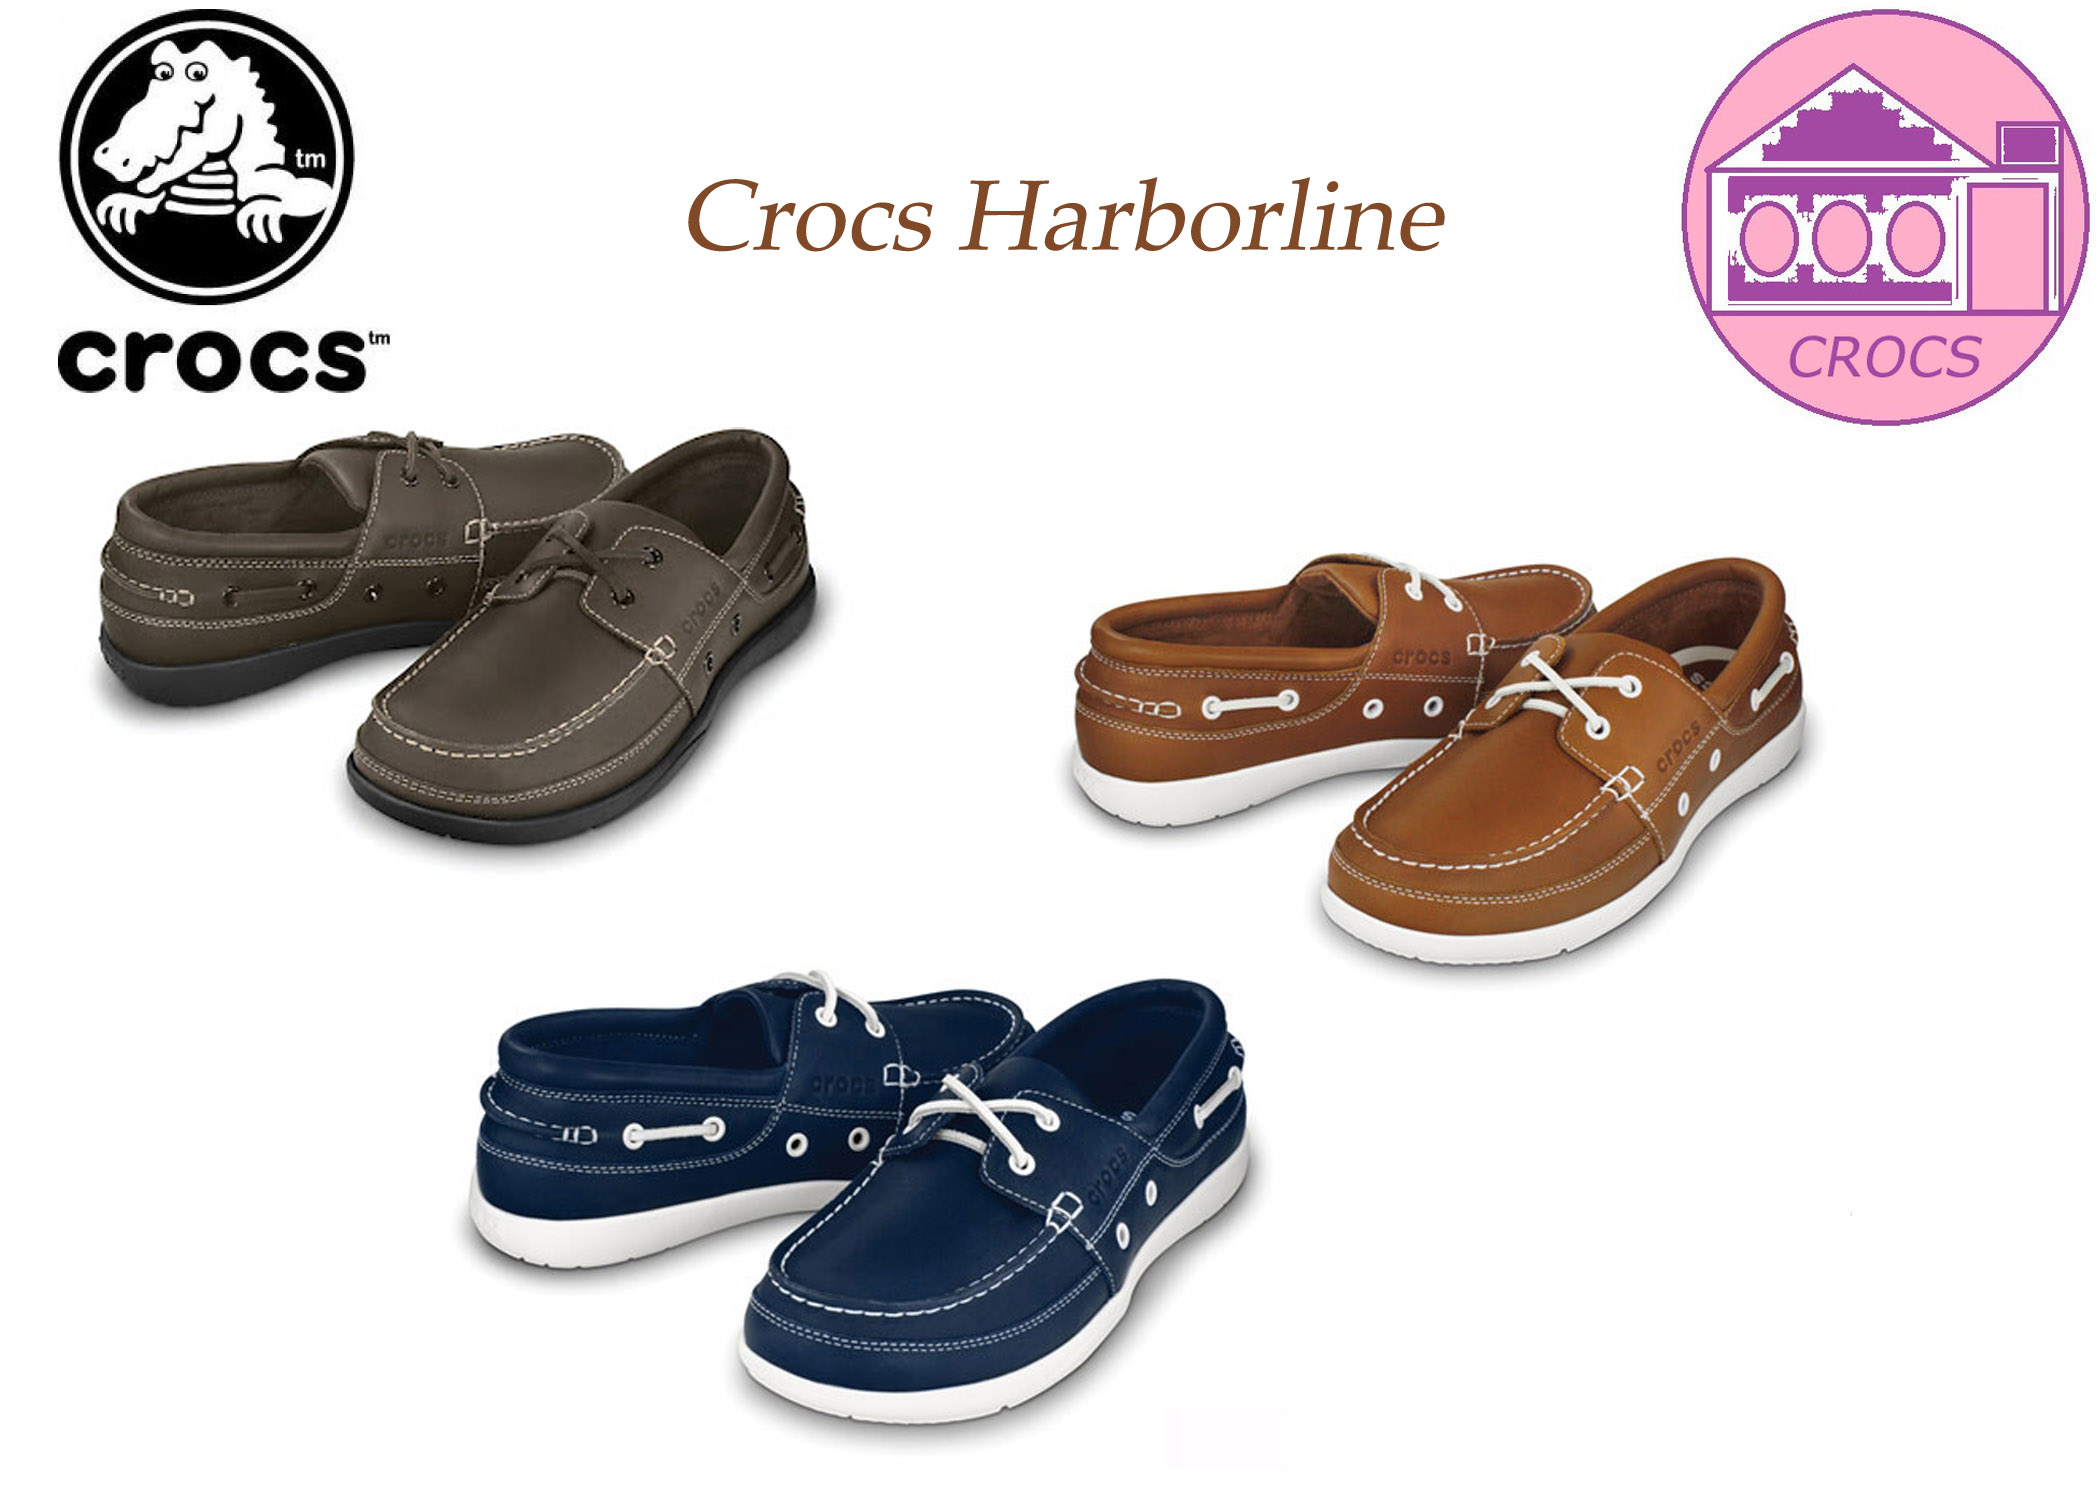 crocs harborline